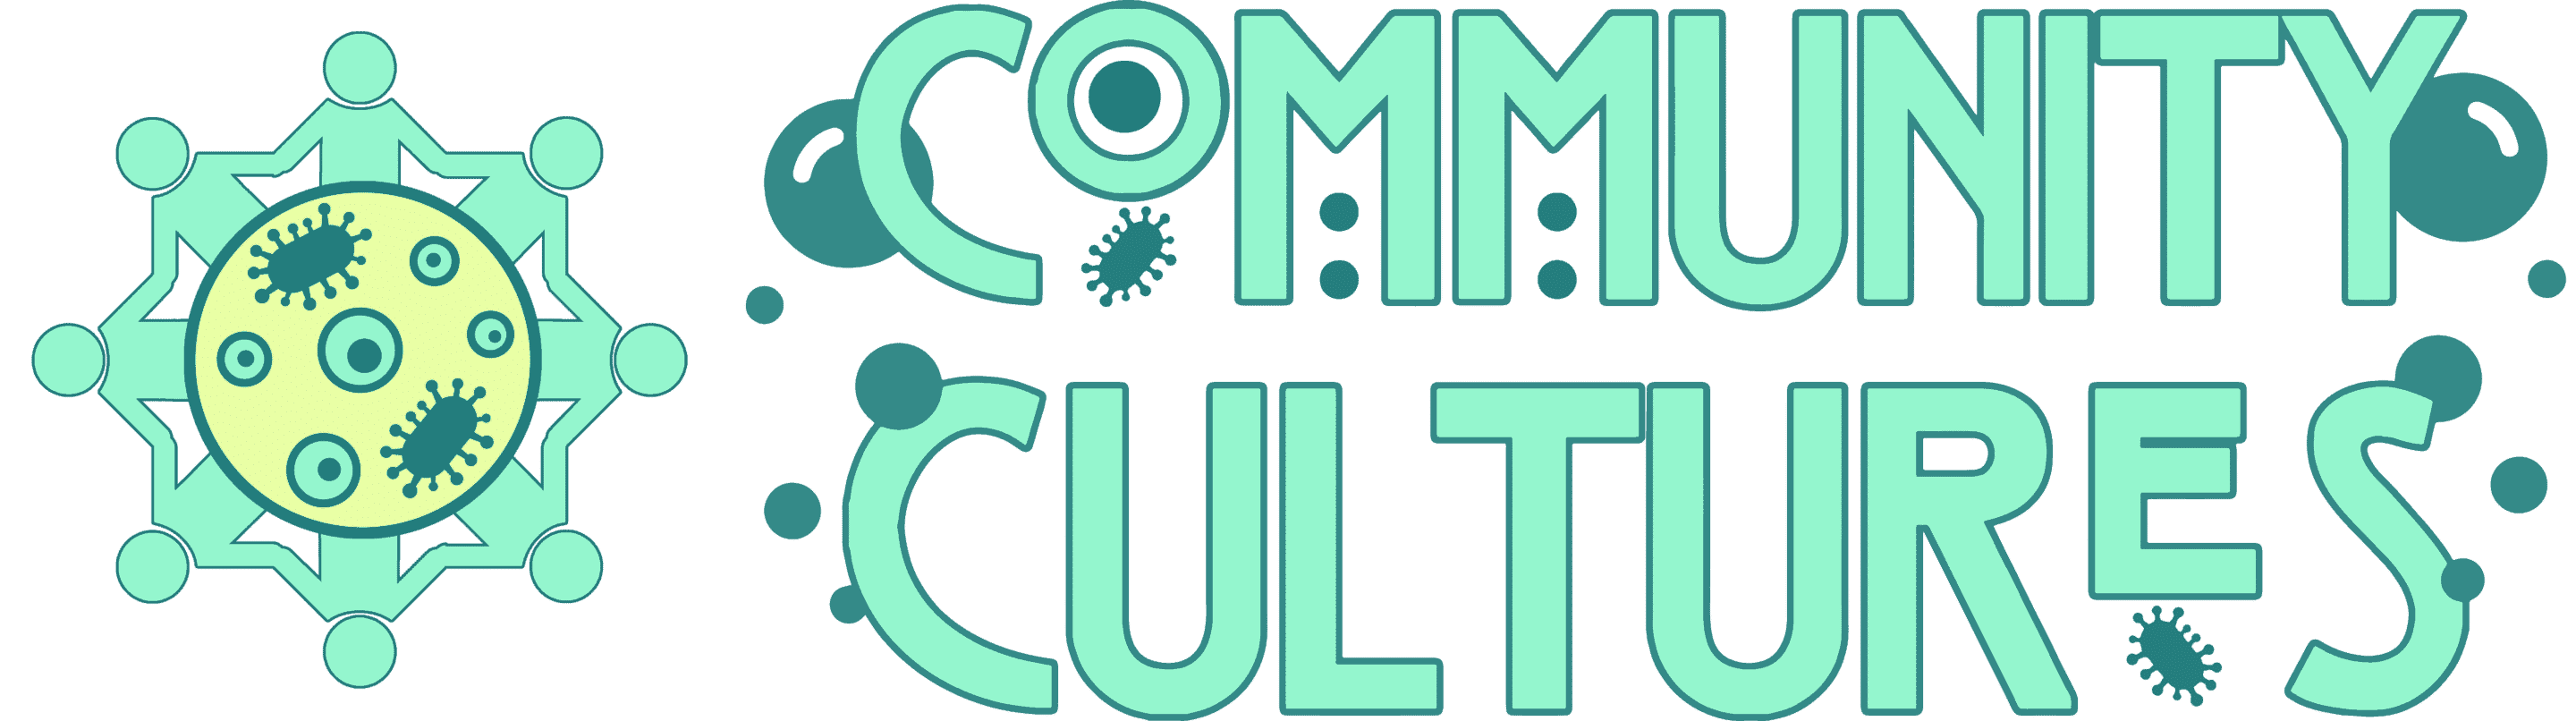 Community Cultures Website Header Logo